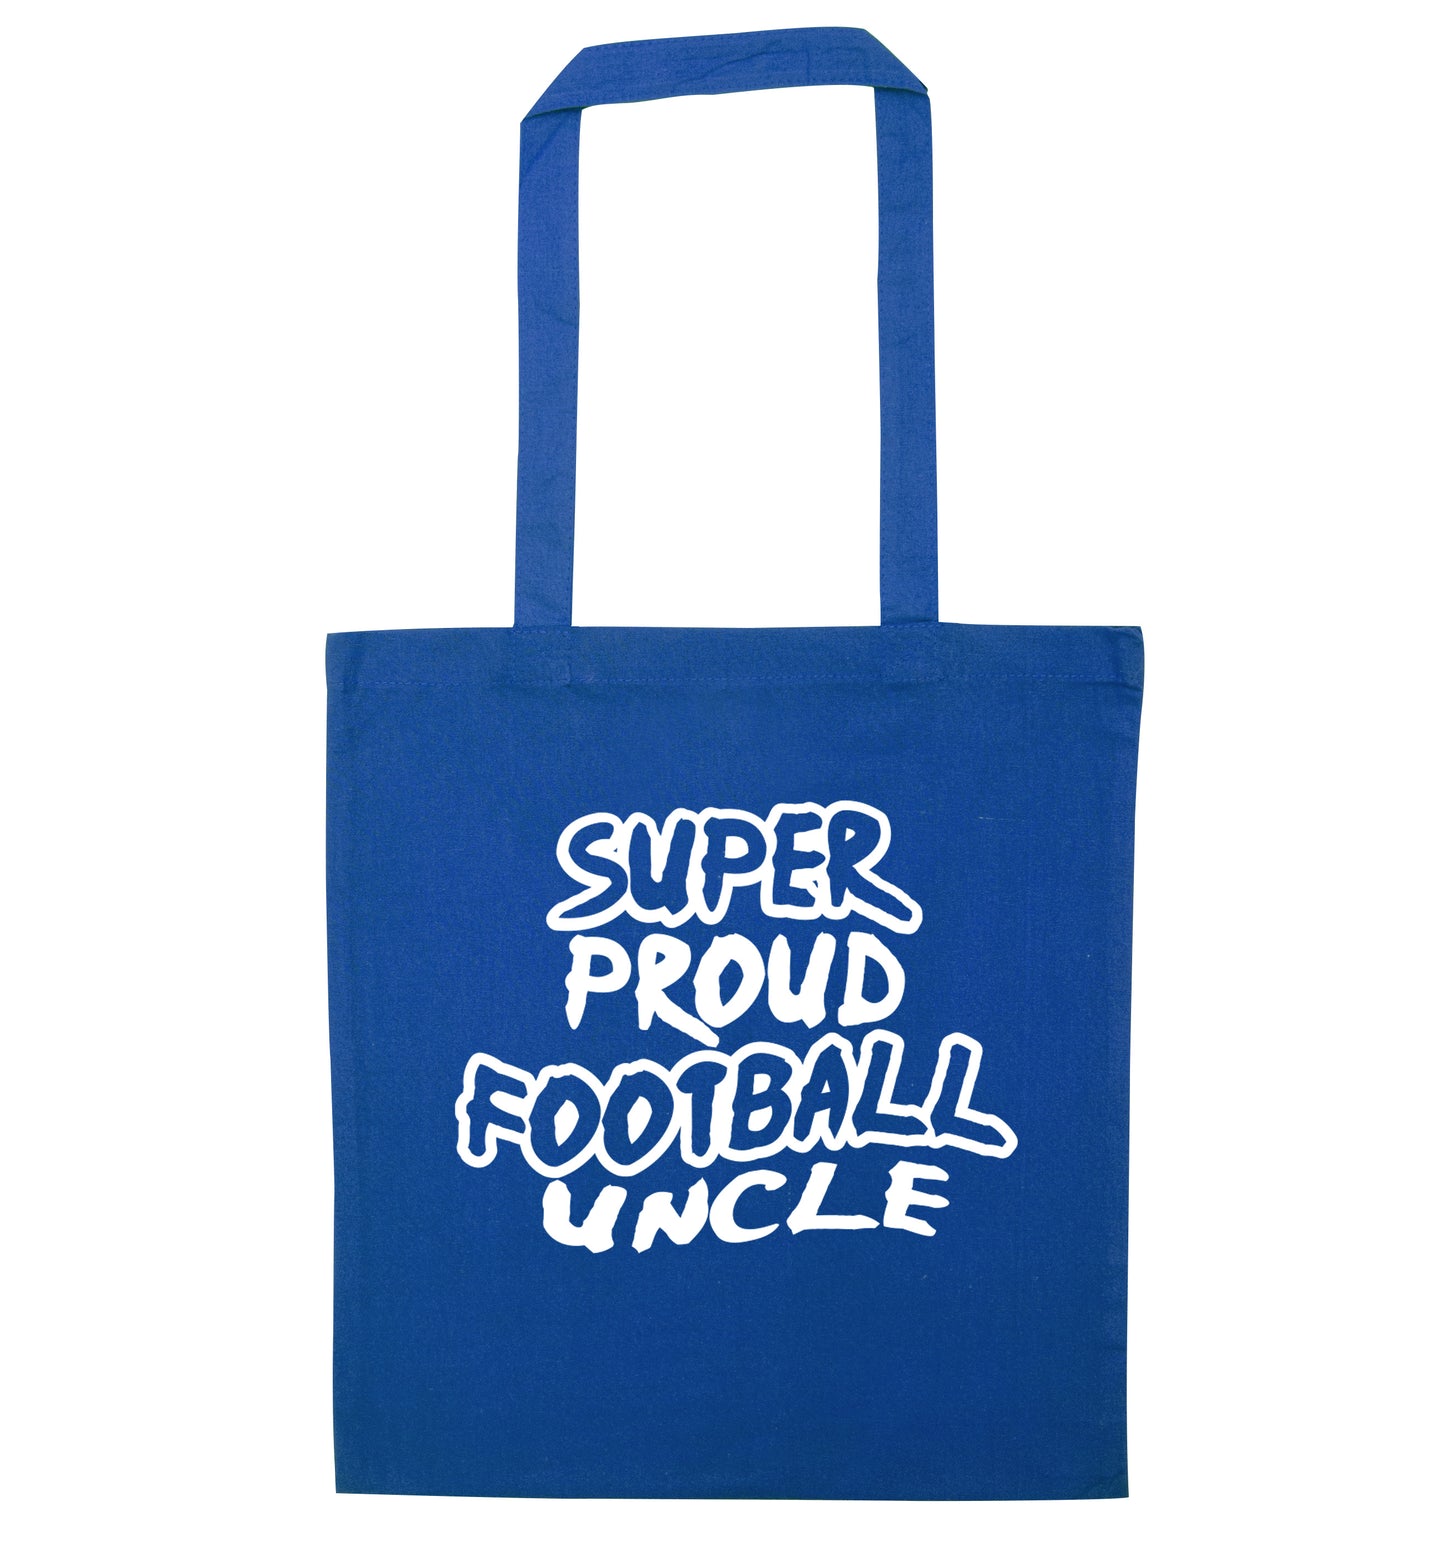 Super proud football uncle blue tote bag